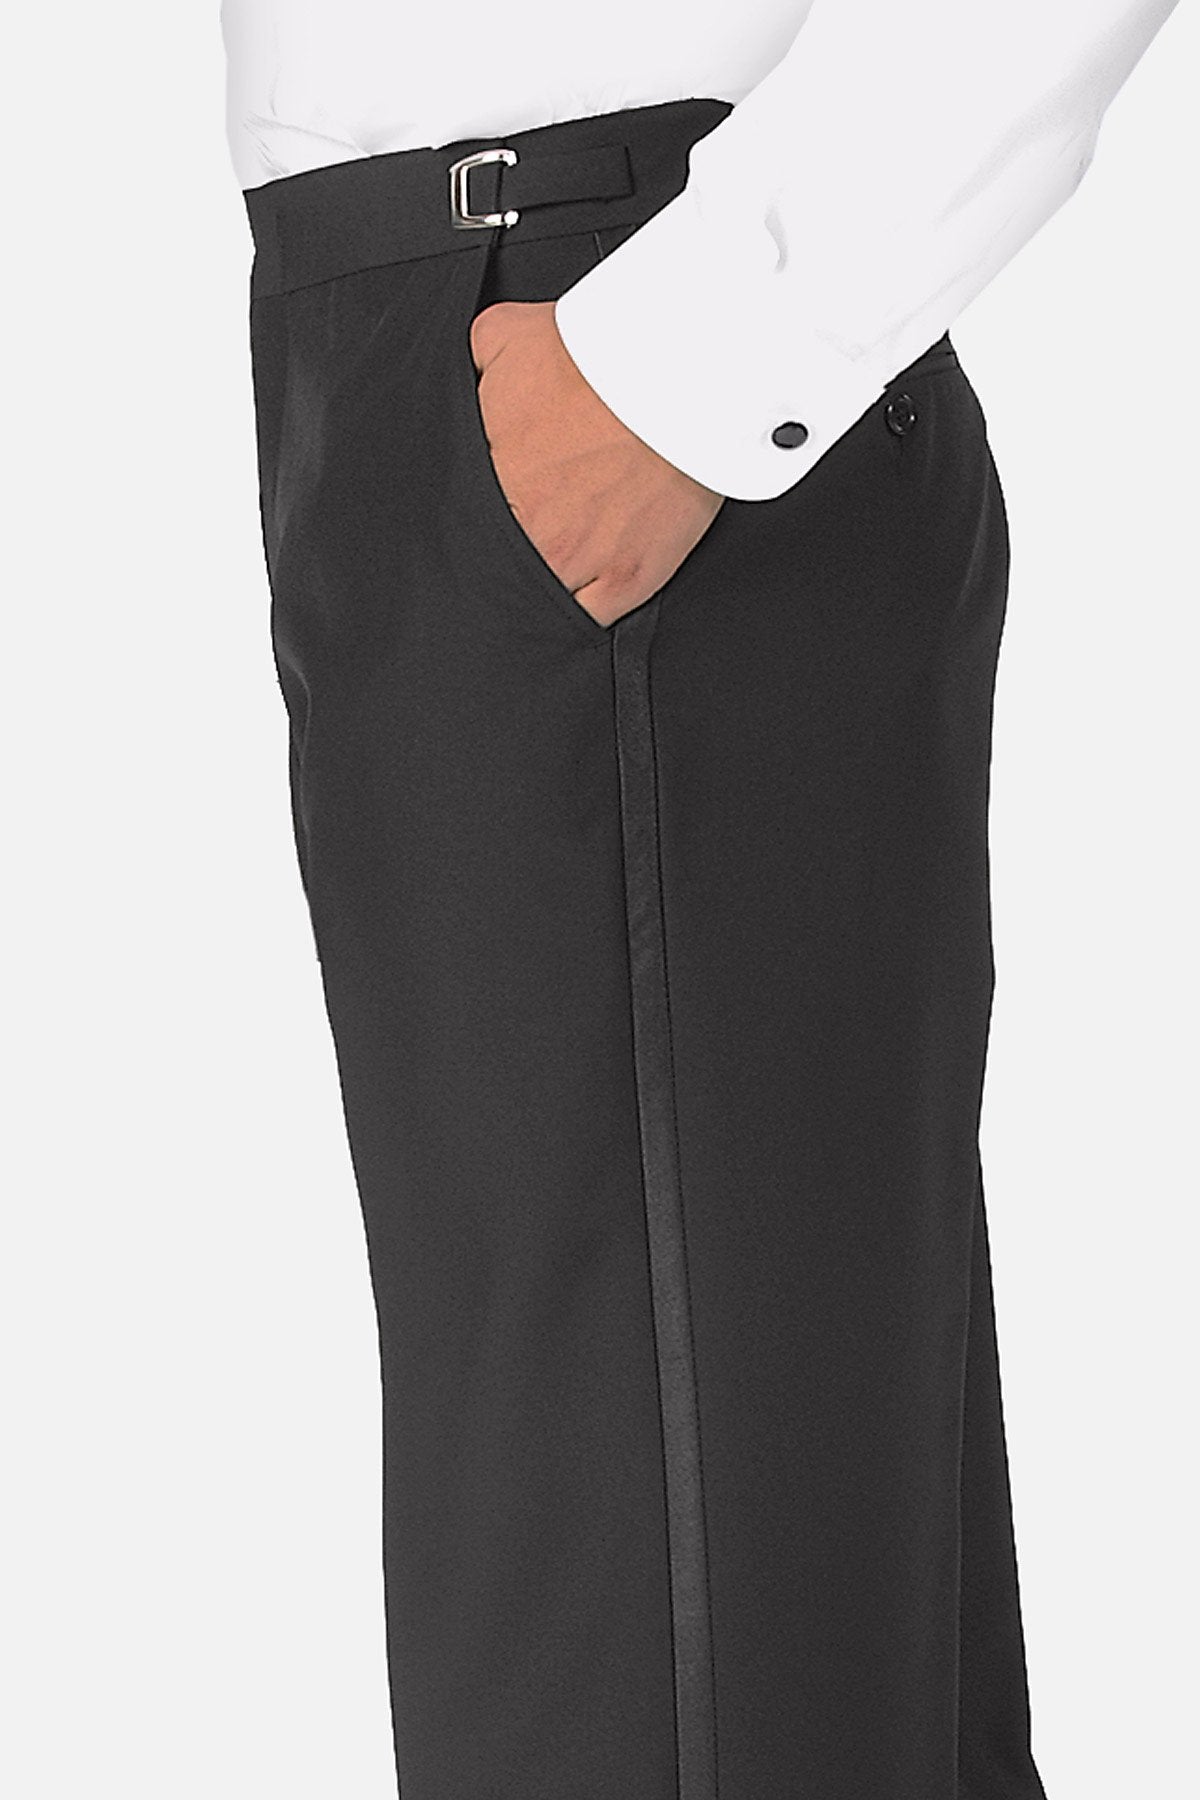 Tuxedo Pants : Made To Measure Custom Jeans For Men & Women,  MakeYourOwnJeans®